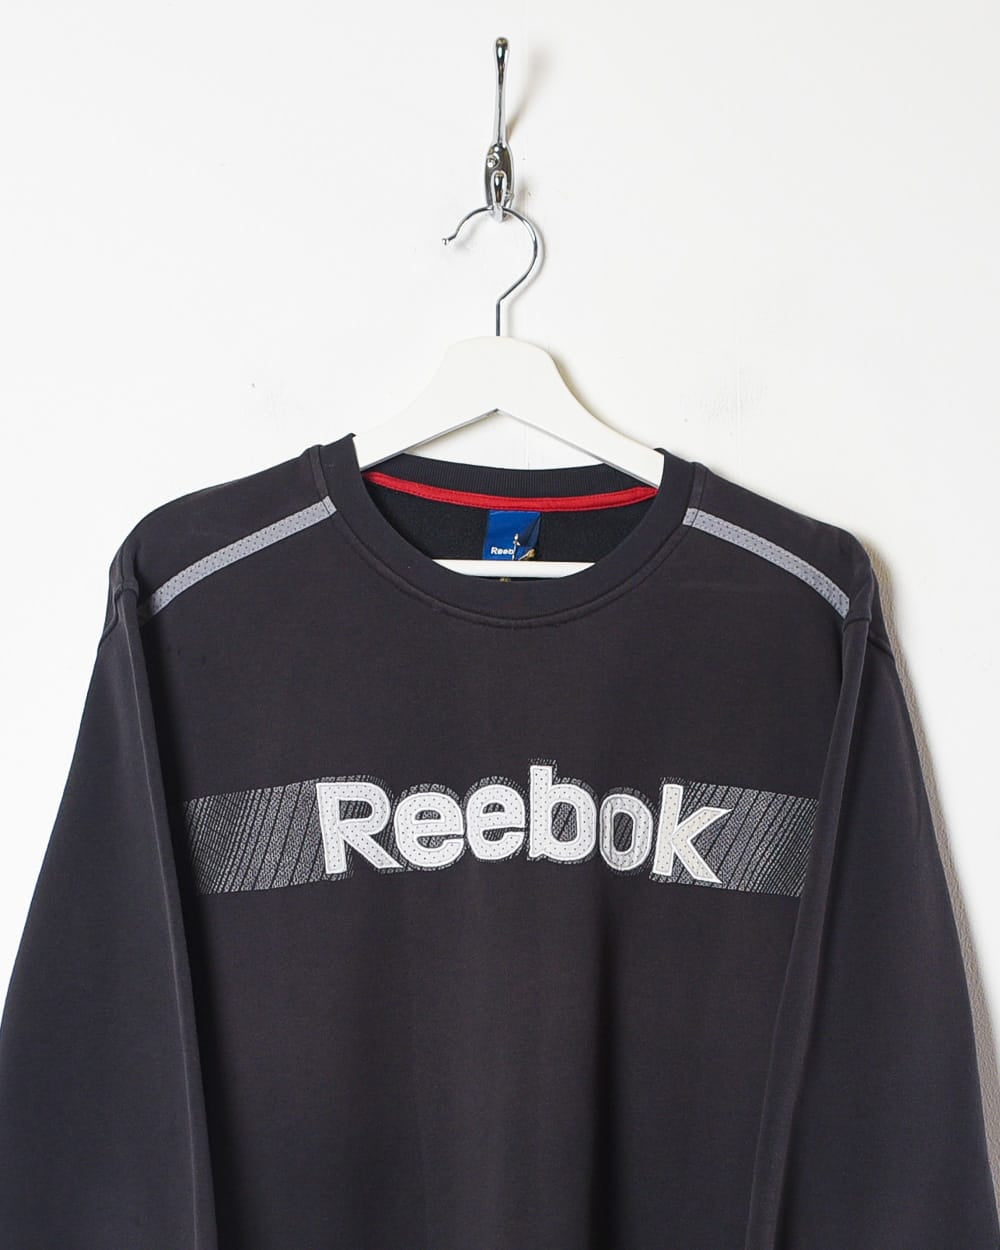 Grey Reebok Sweatshirt - Small